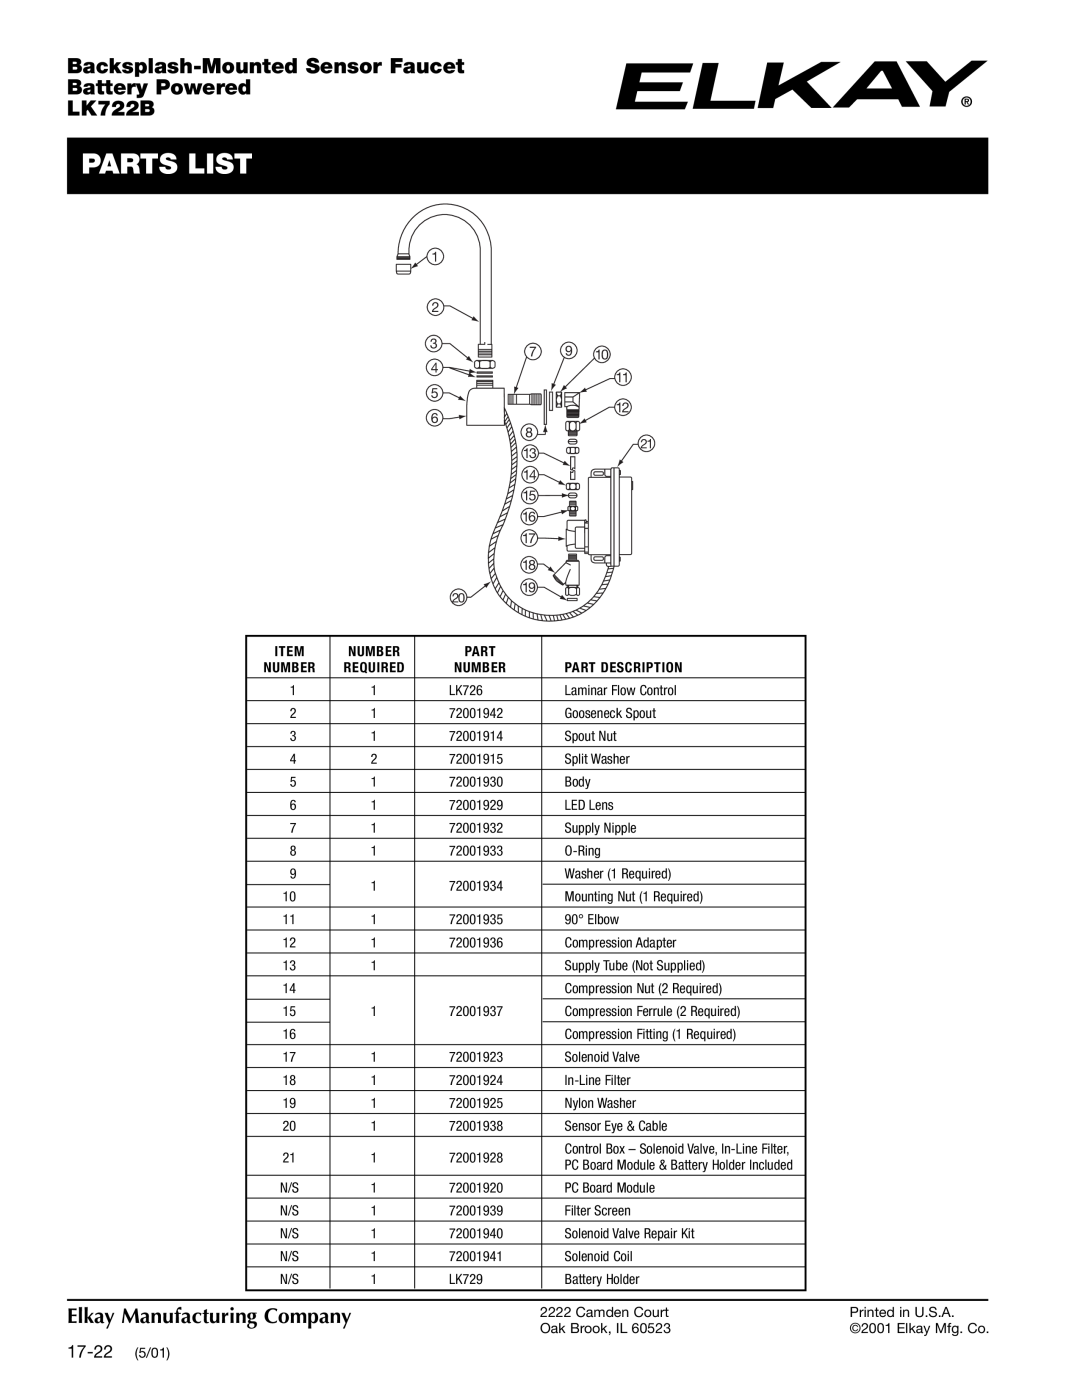 Elkay LK722B Parts List, 17-22 5/01, Backsplash-MountedSensor Faucet Battery Powered, Elkay Manufacturing Company, Number 